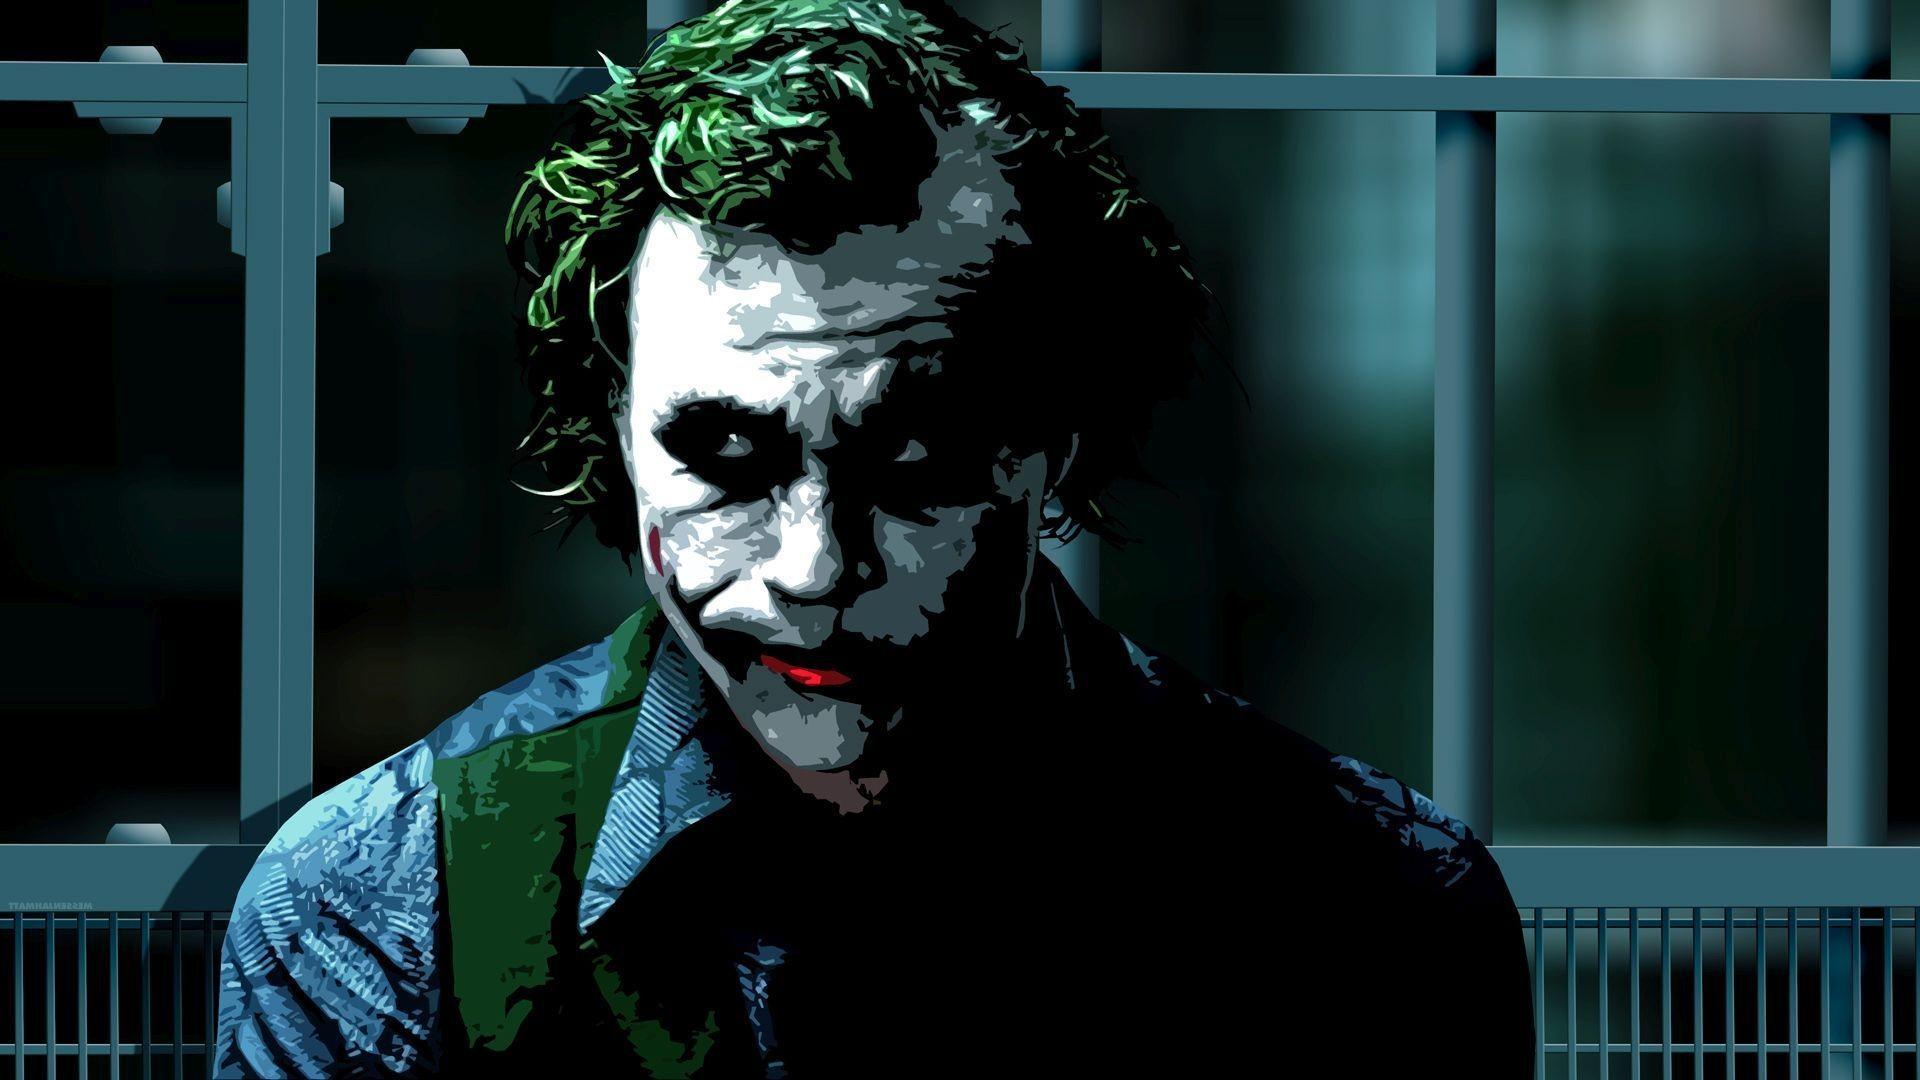 The Dark Knight Joker Wallpaper background picture